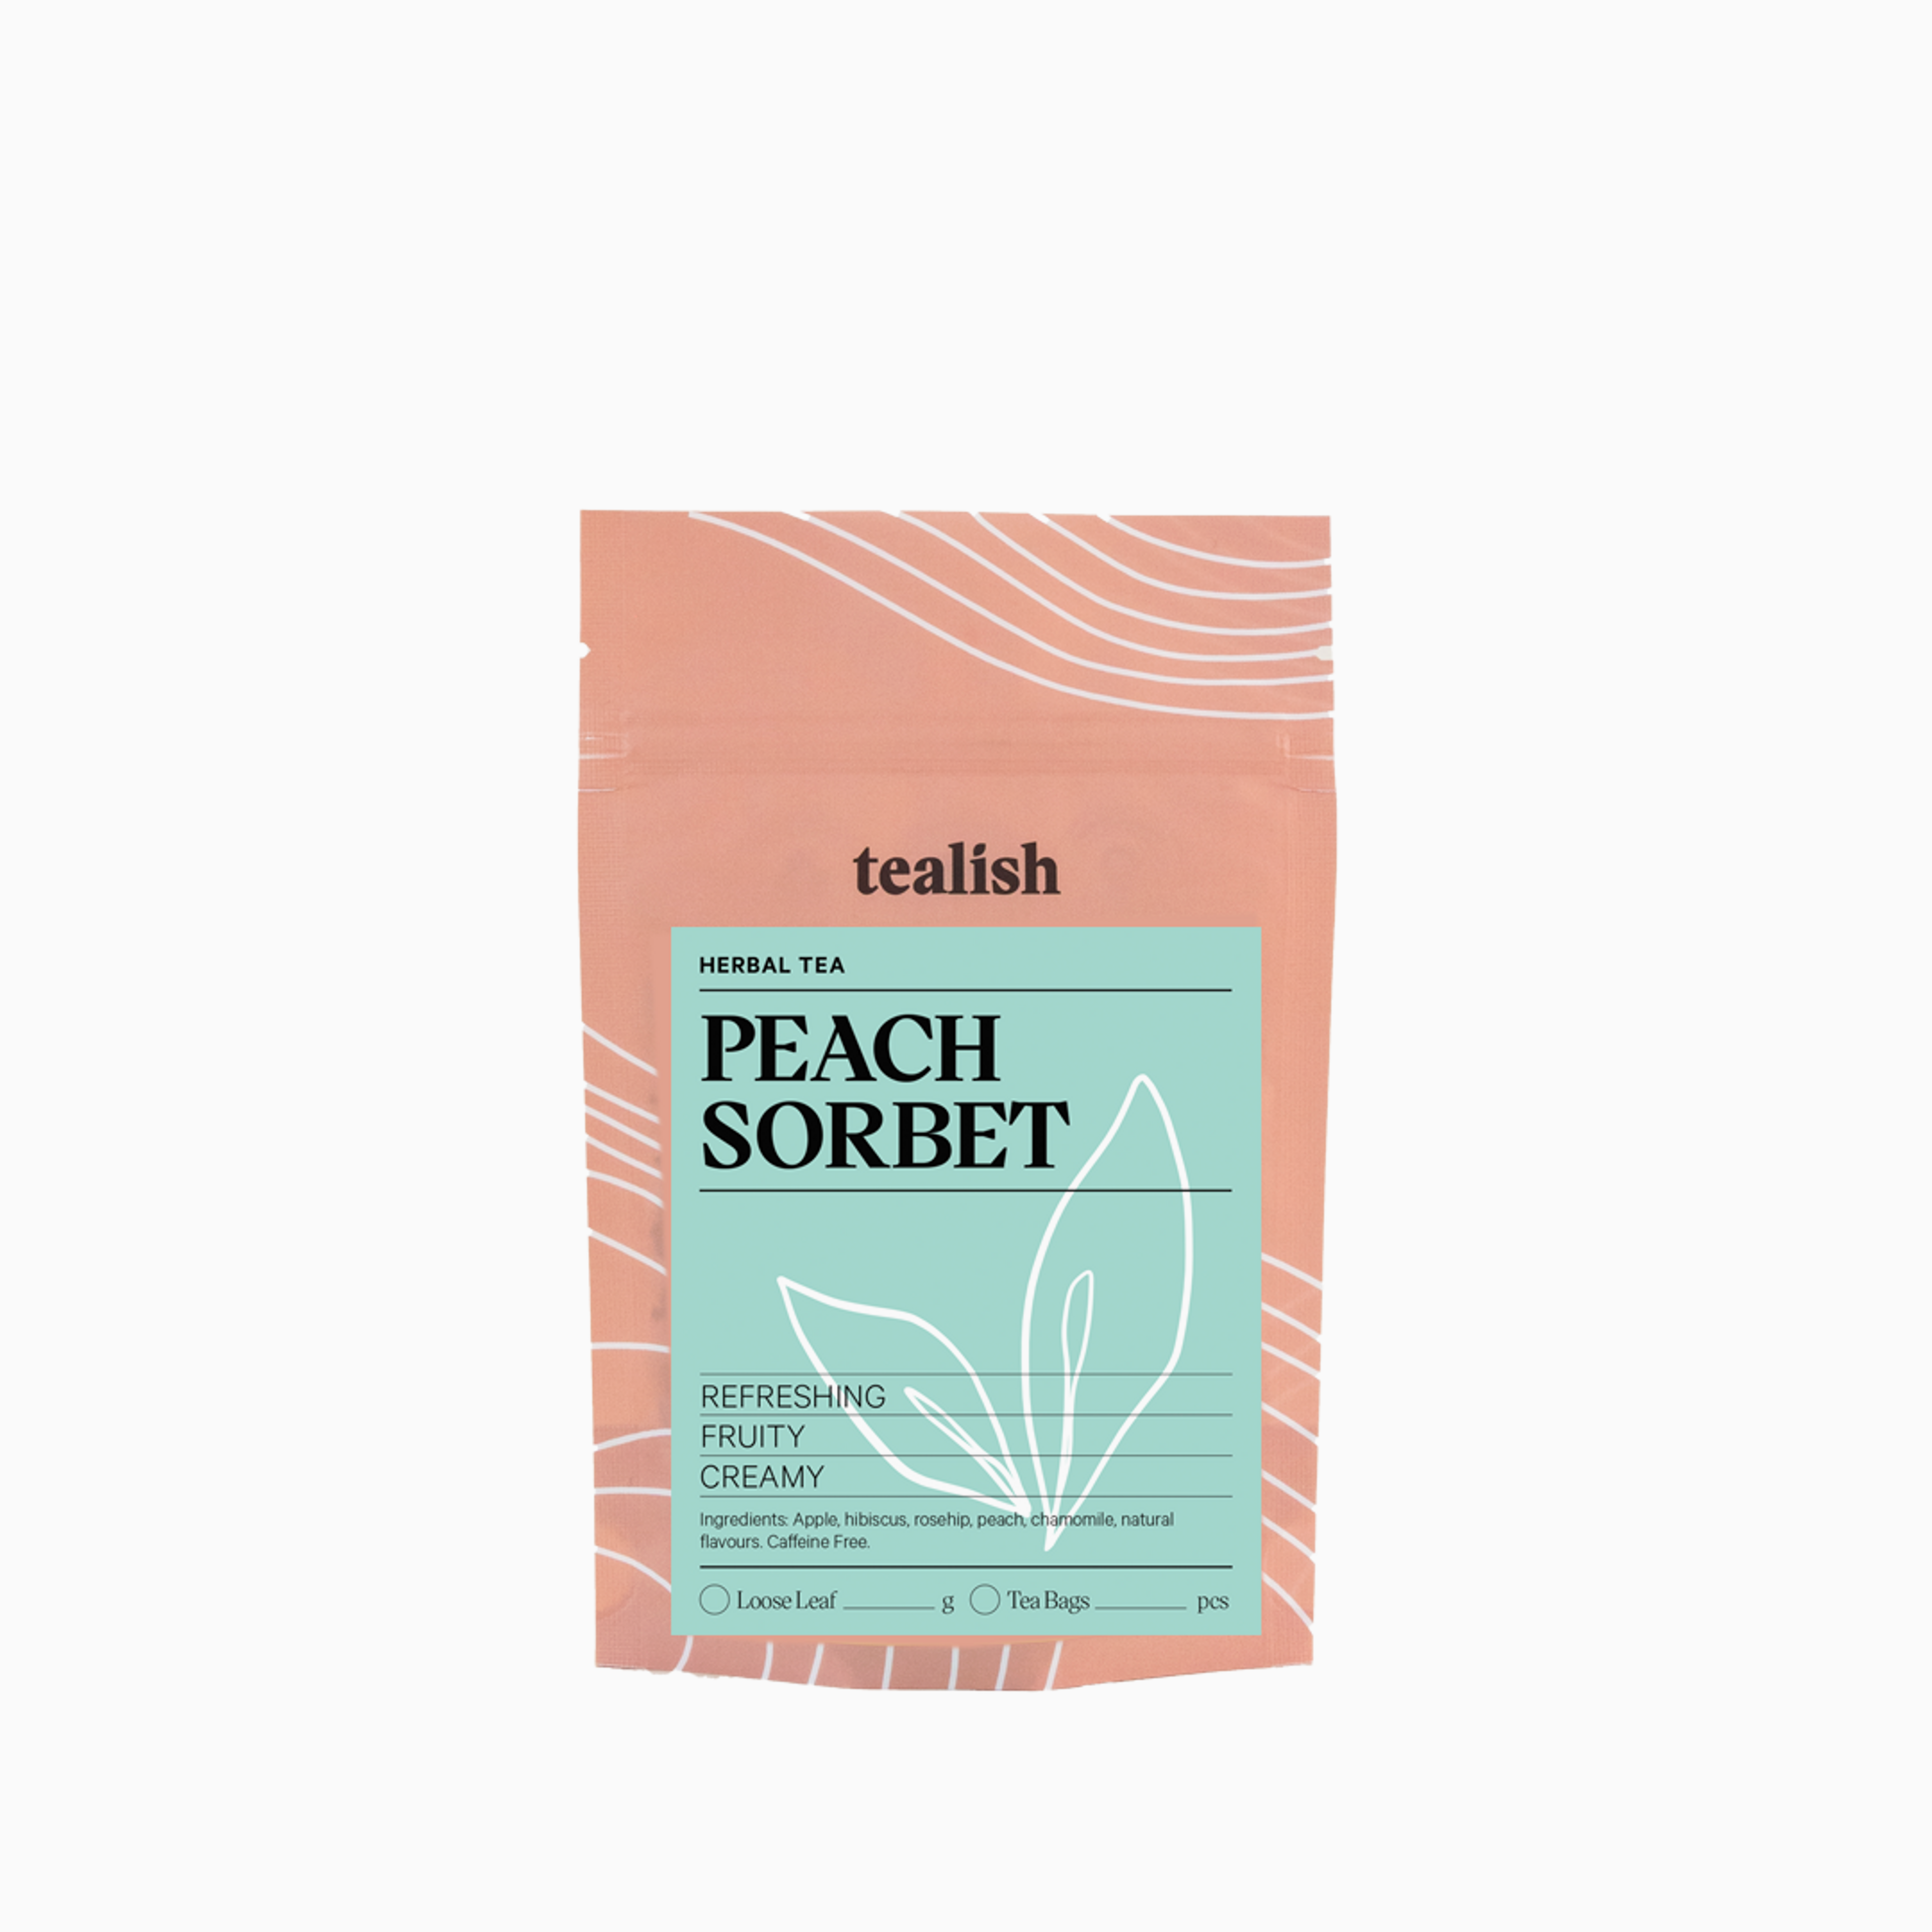 Peach Sorbet